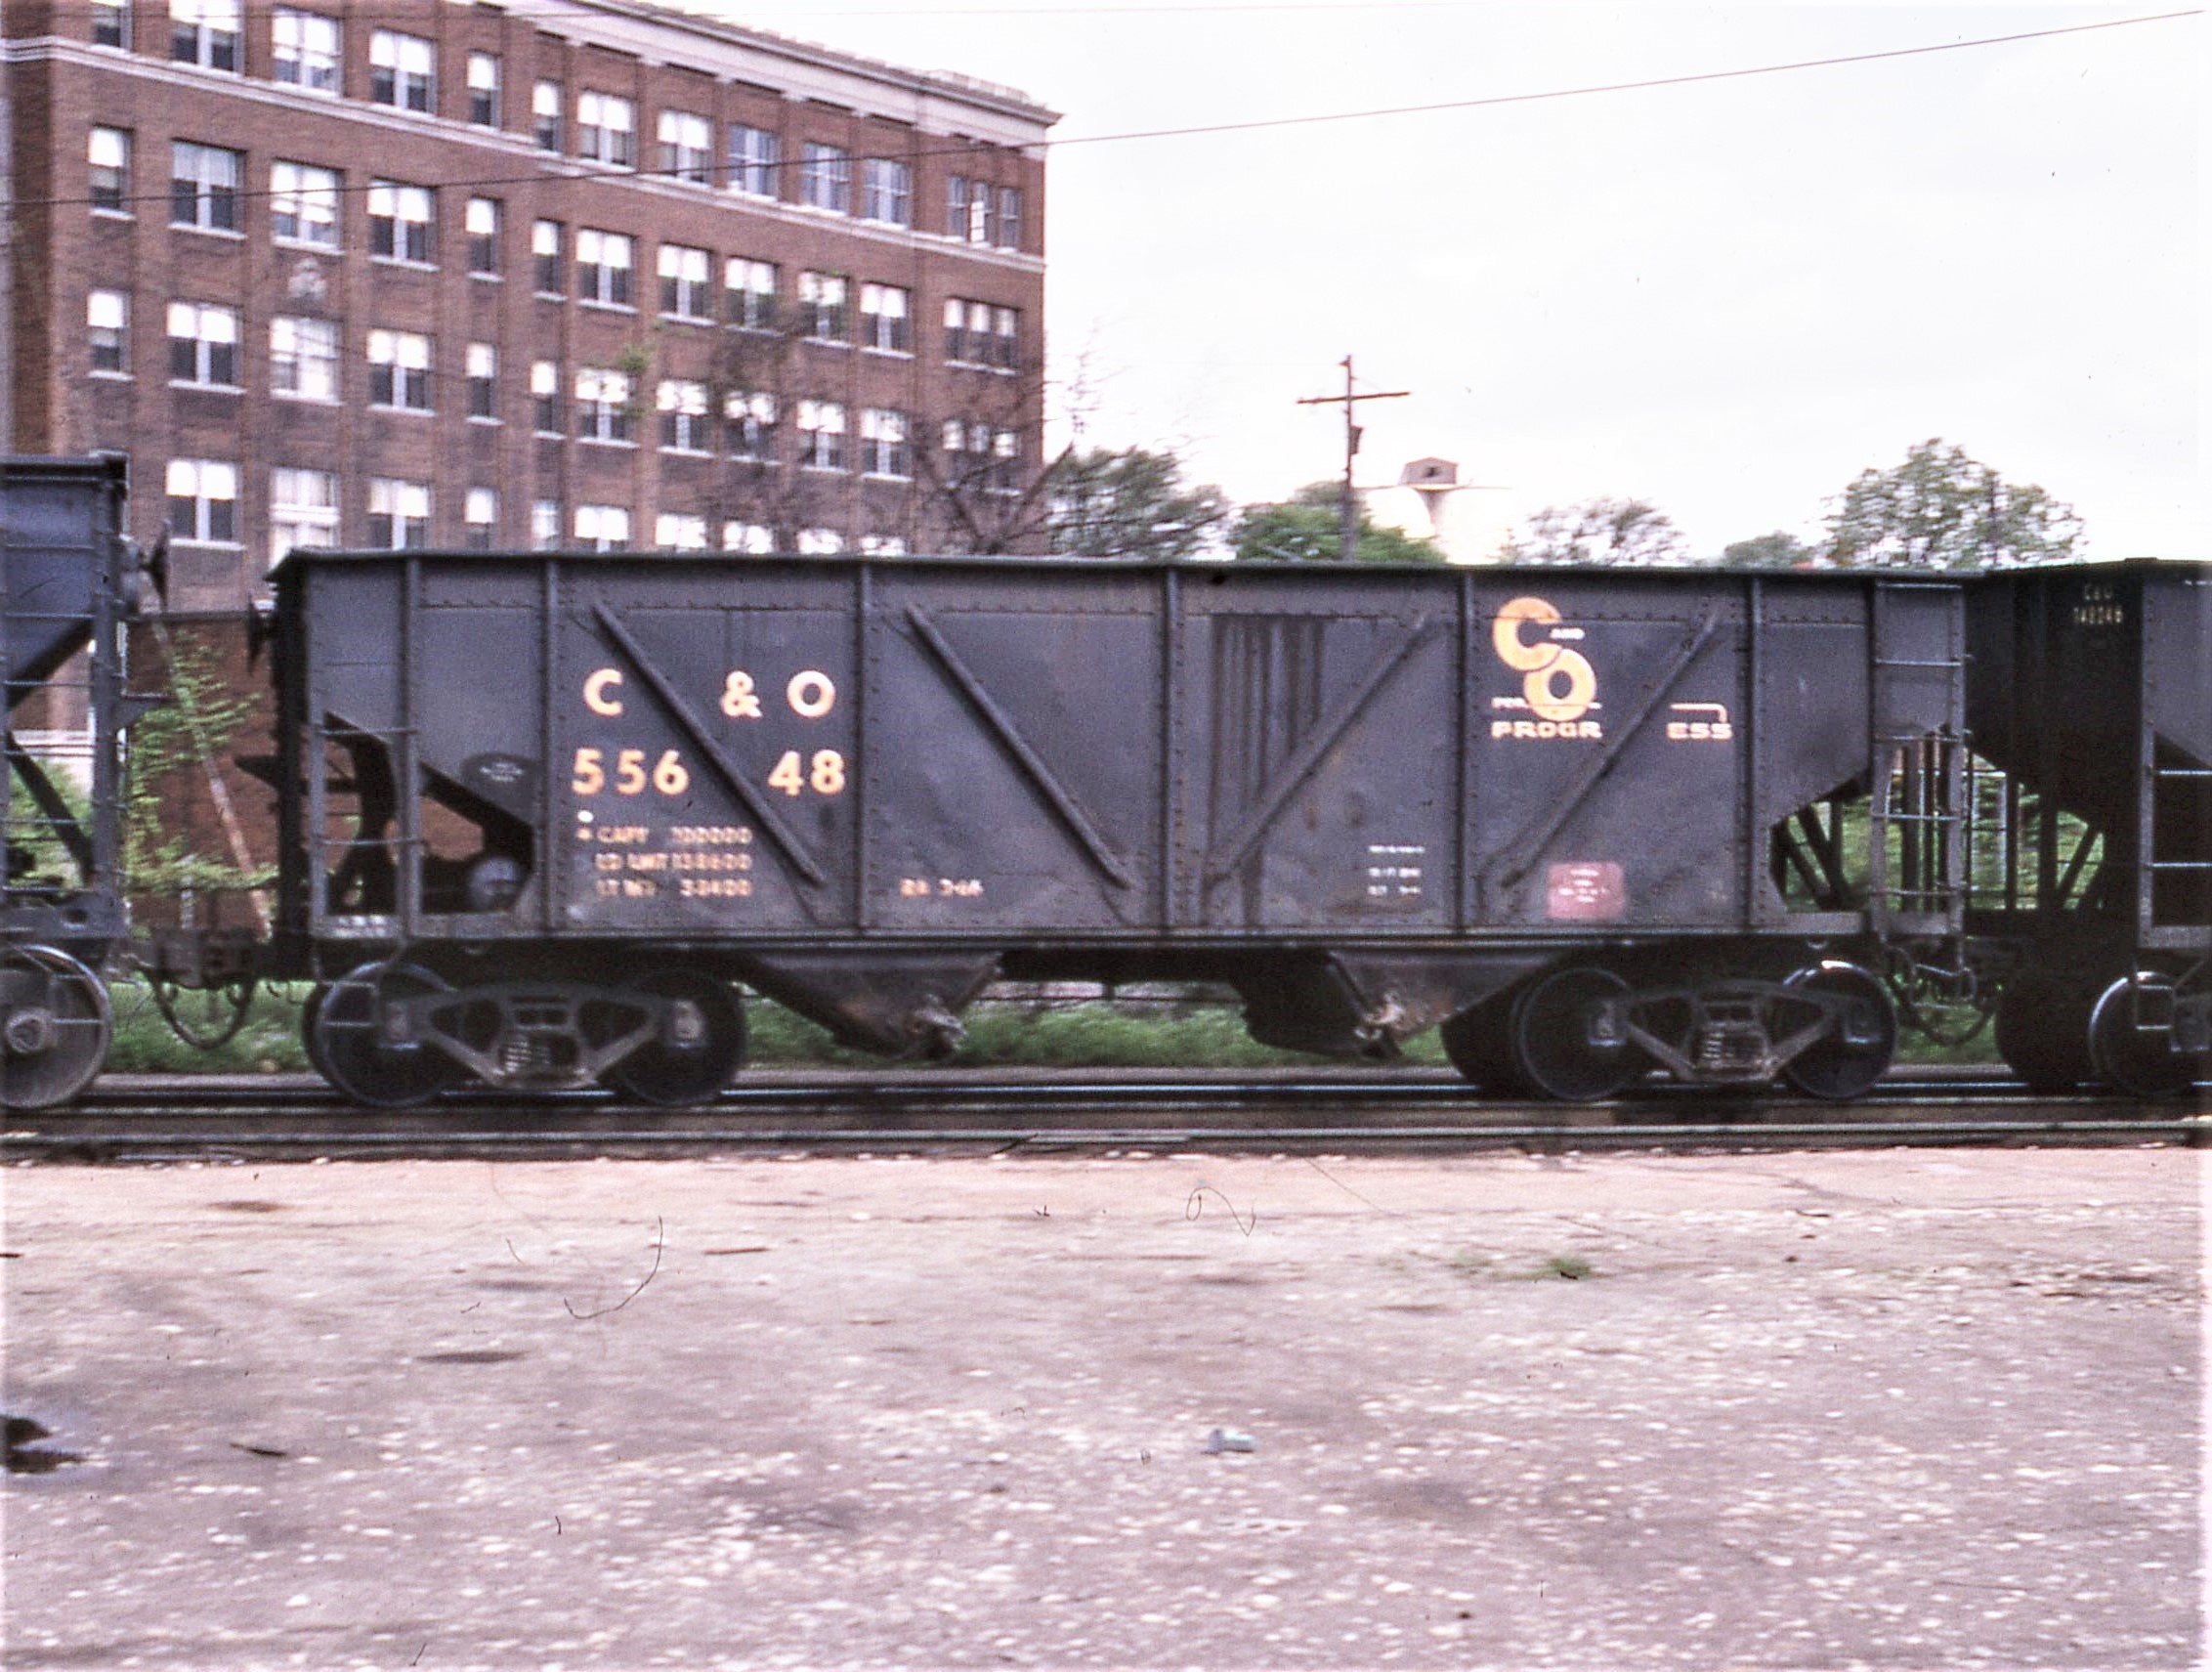 Chesapeake and Ohio Railroad | Mansfield, Ohio | 50-Ton 2 Bay Hopper #55648 | May 12, 1973 | Emery Gulash photograph